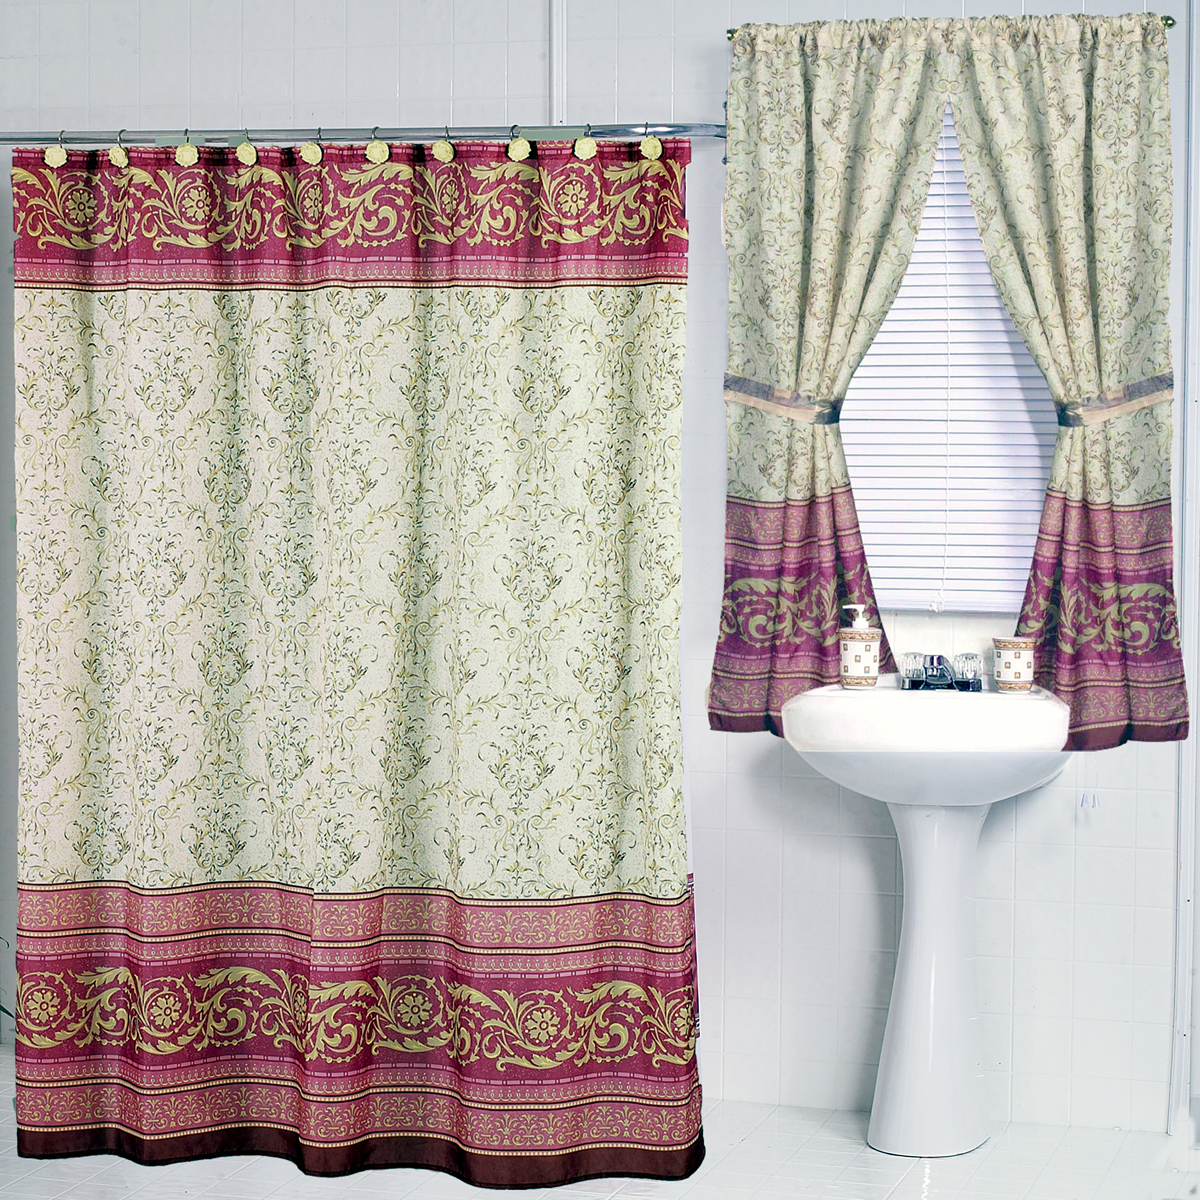 Bathroom shower curtain ideas to beautify your bathroom 1